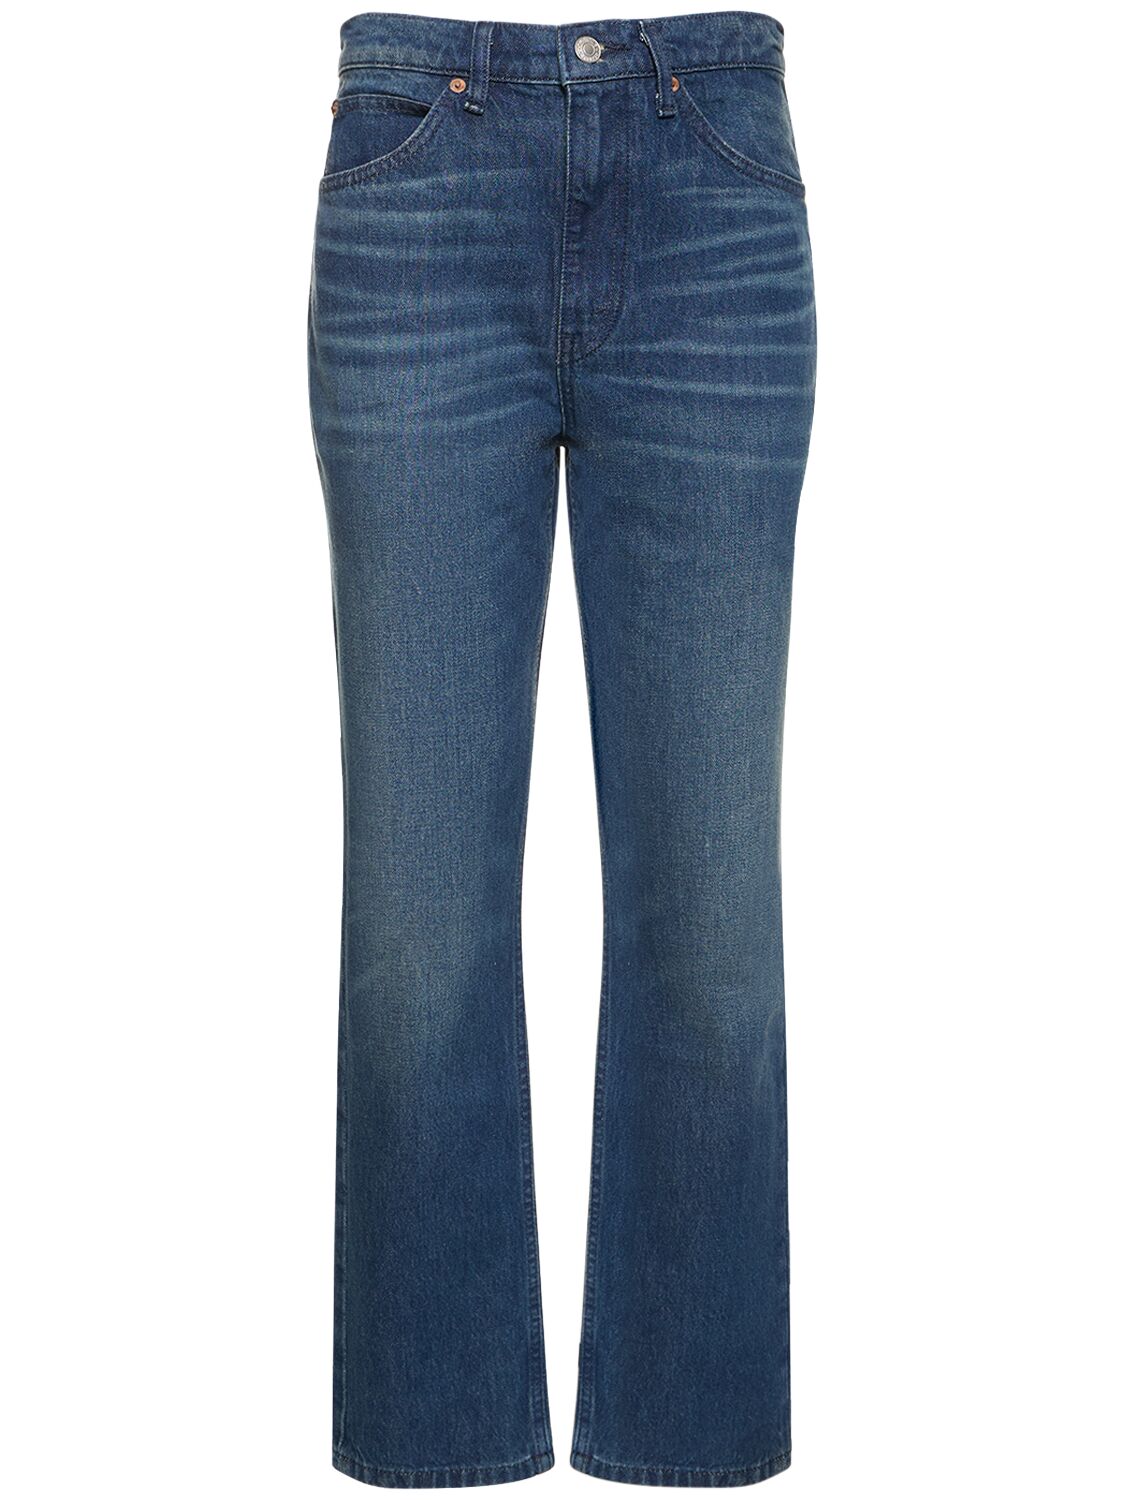 70s Straight Cotton Denim Jeans